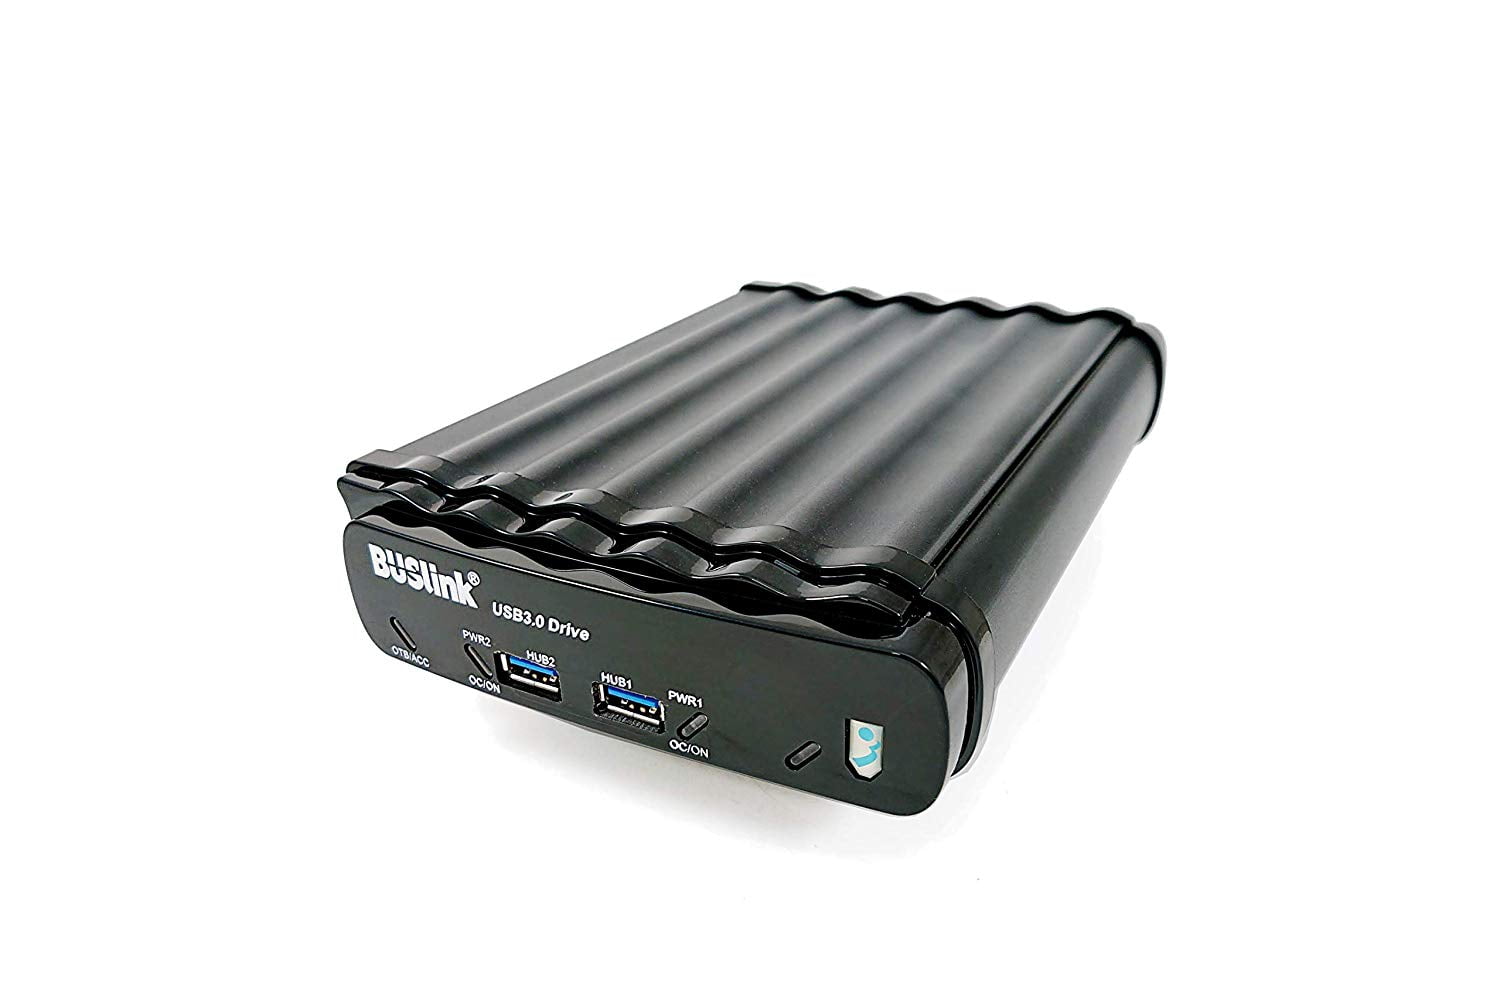 Buslink USB 3.0/eSATA with Hub External Desktop Hard Drive (14TB) 